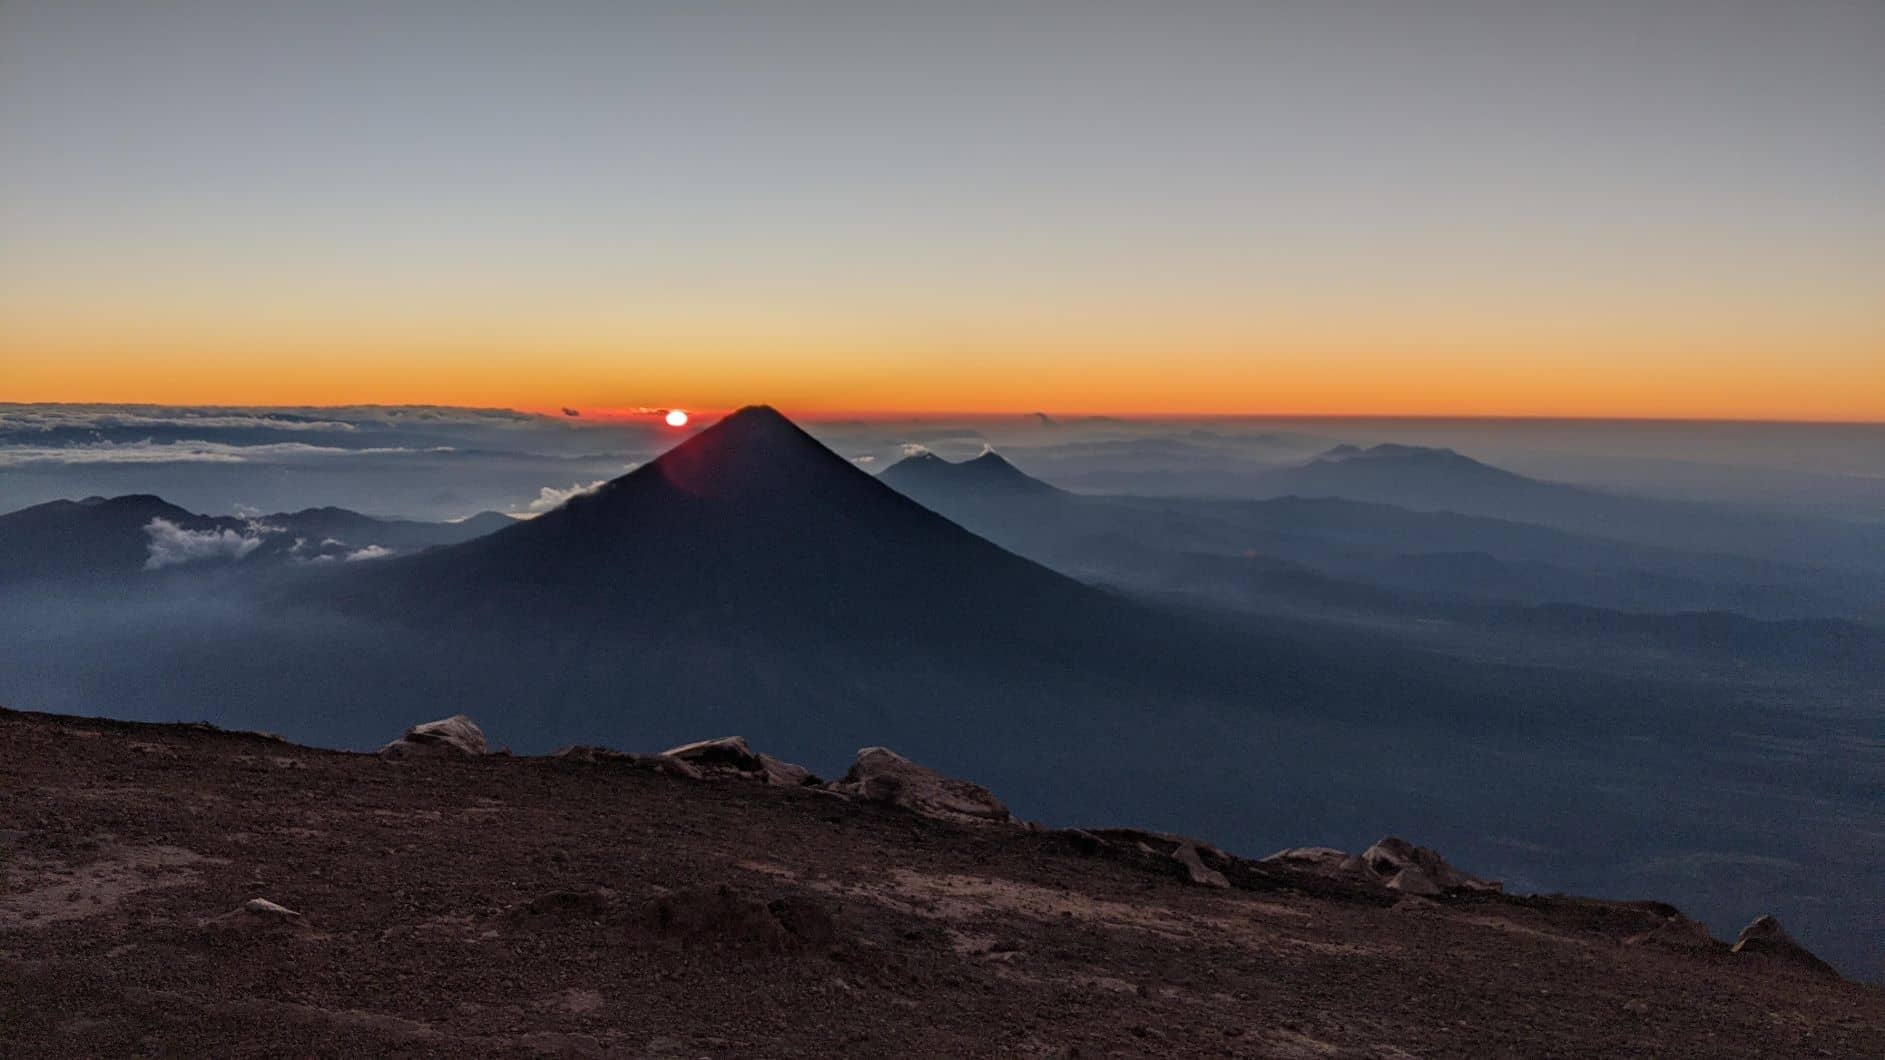 Sunrise from the top of acatenango volcano